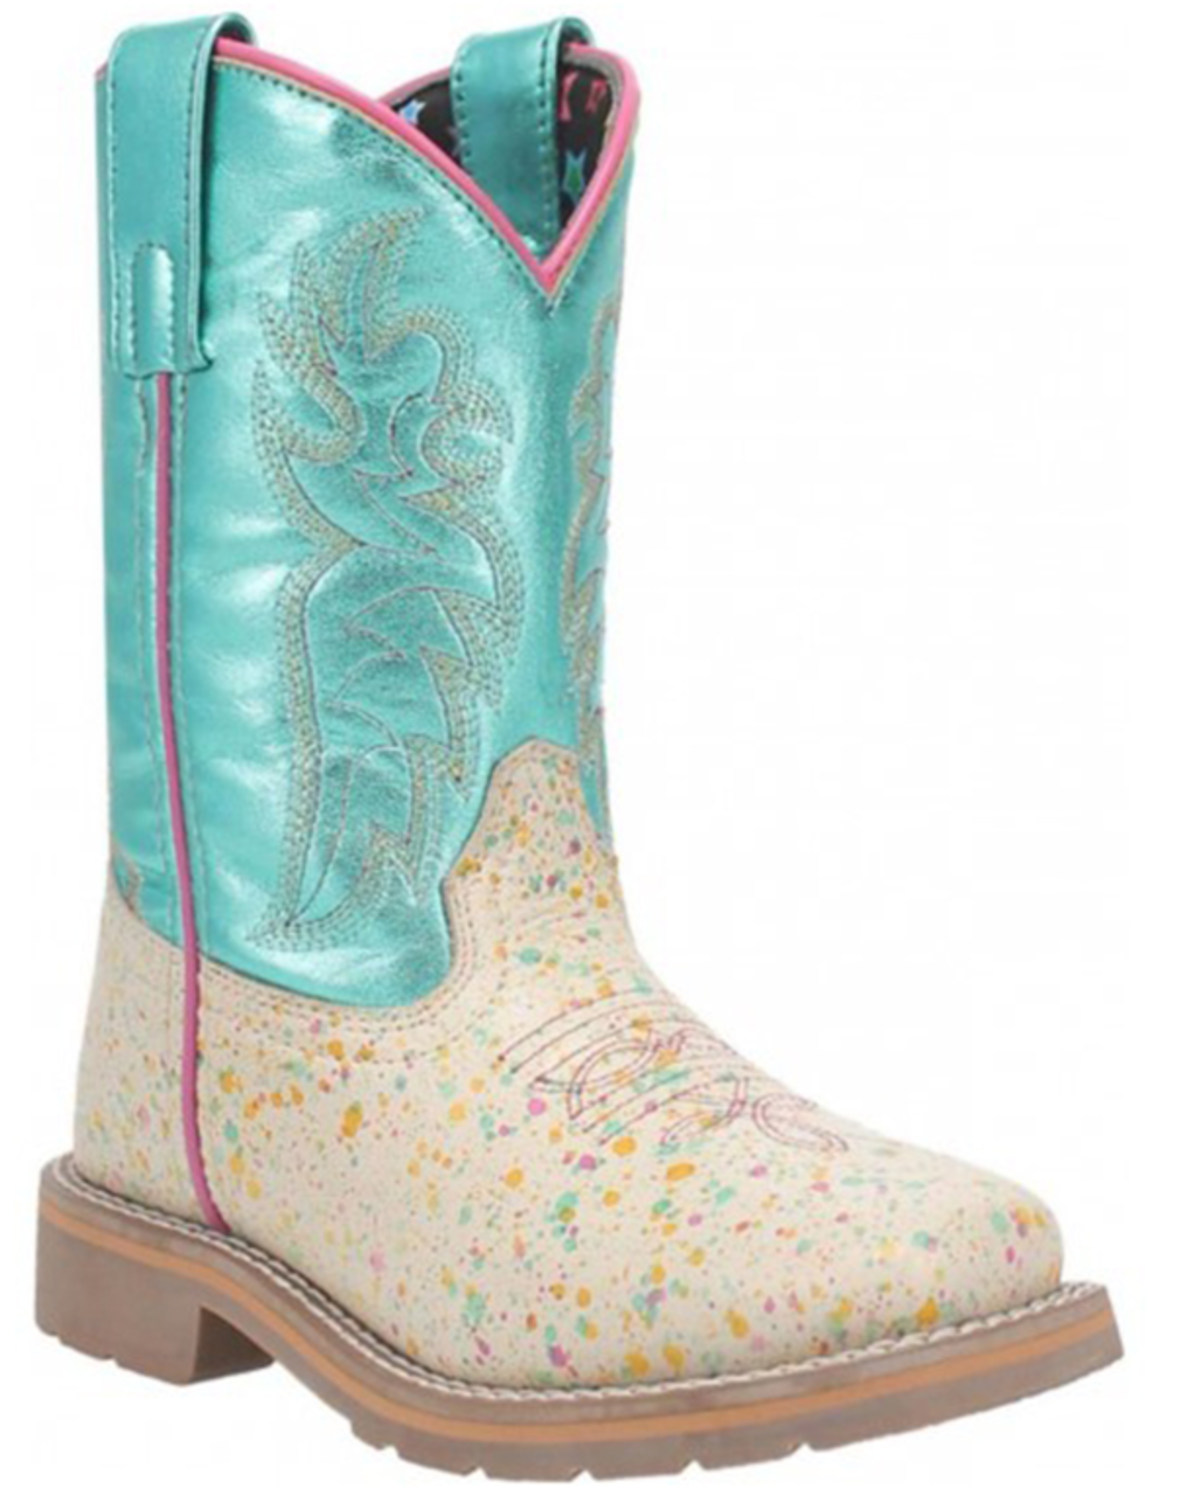 Dan Post Toddler Girls' Splatt Western Boots - Square Toe